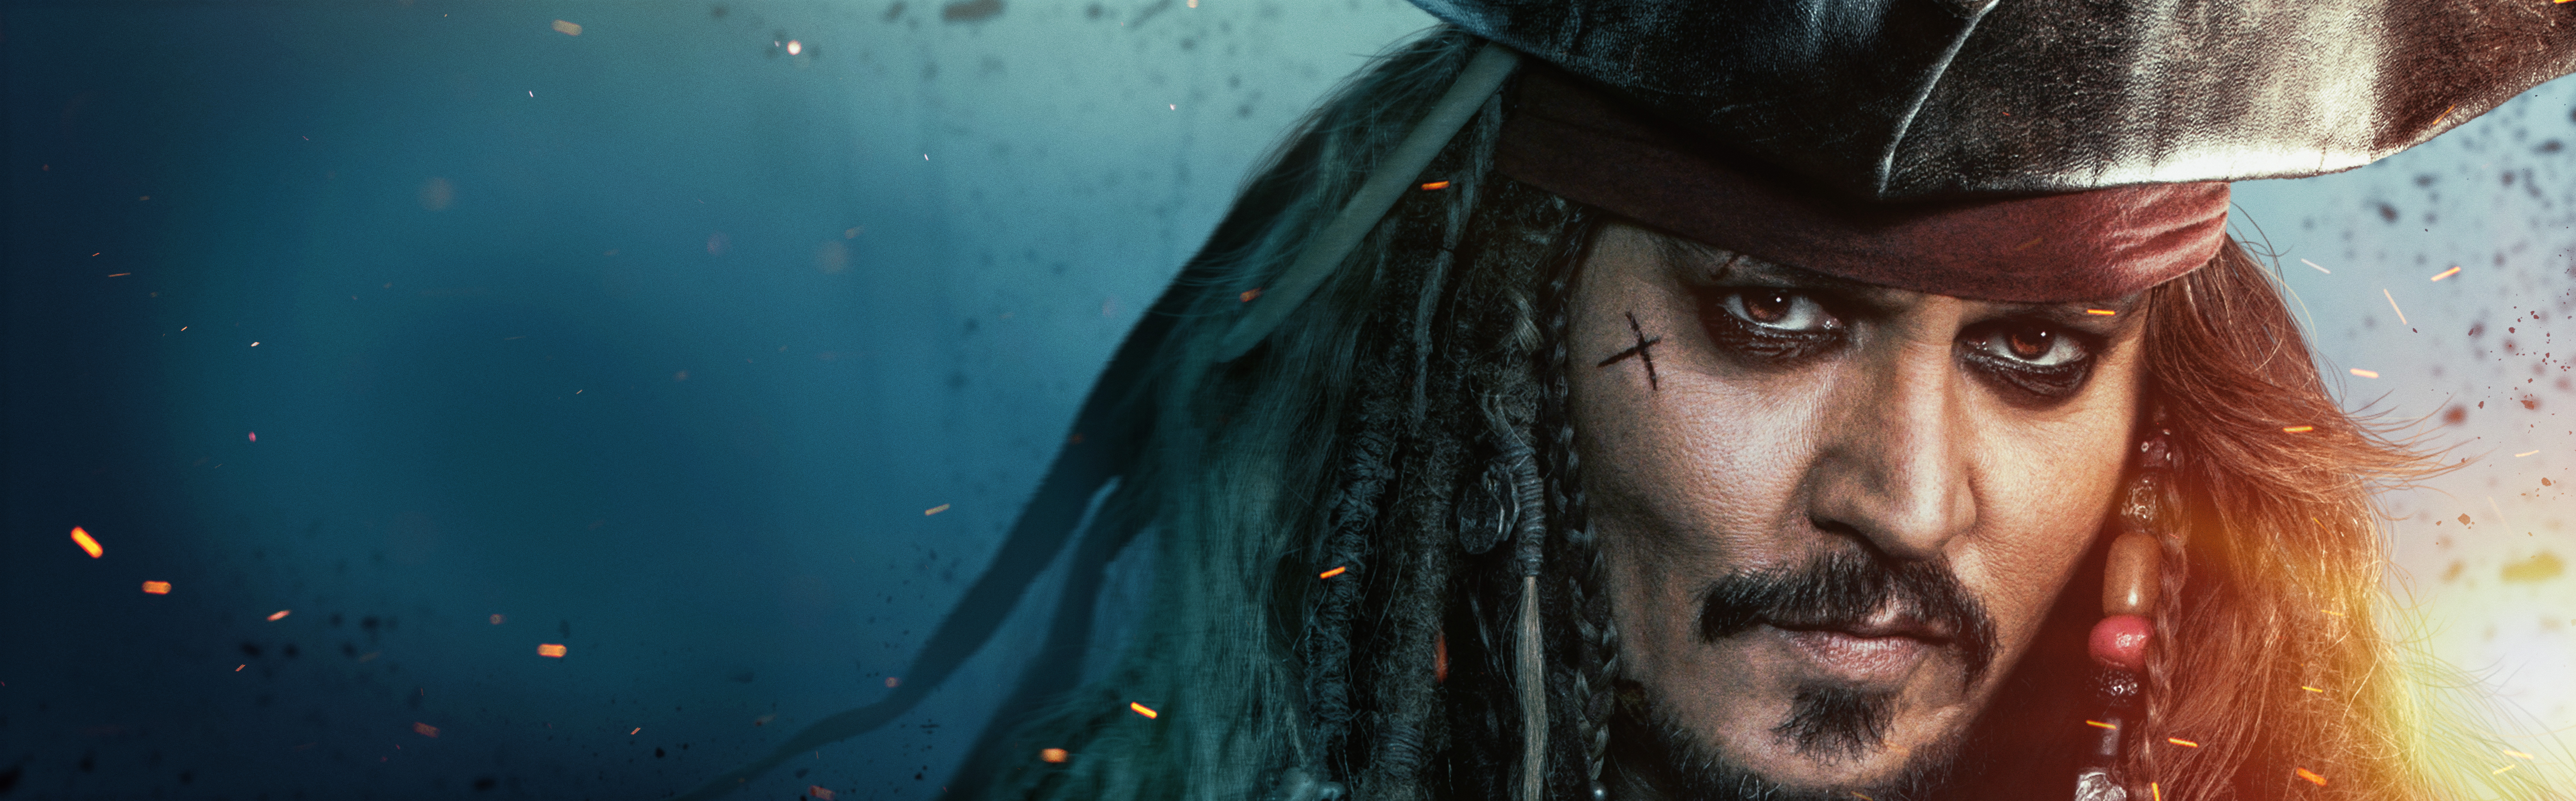 Обои фильм Приключения Pirates of the Caribbean: Dead men tell no tales на рабочий стол